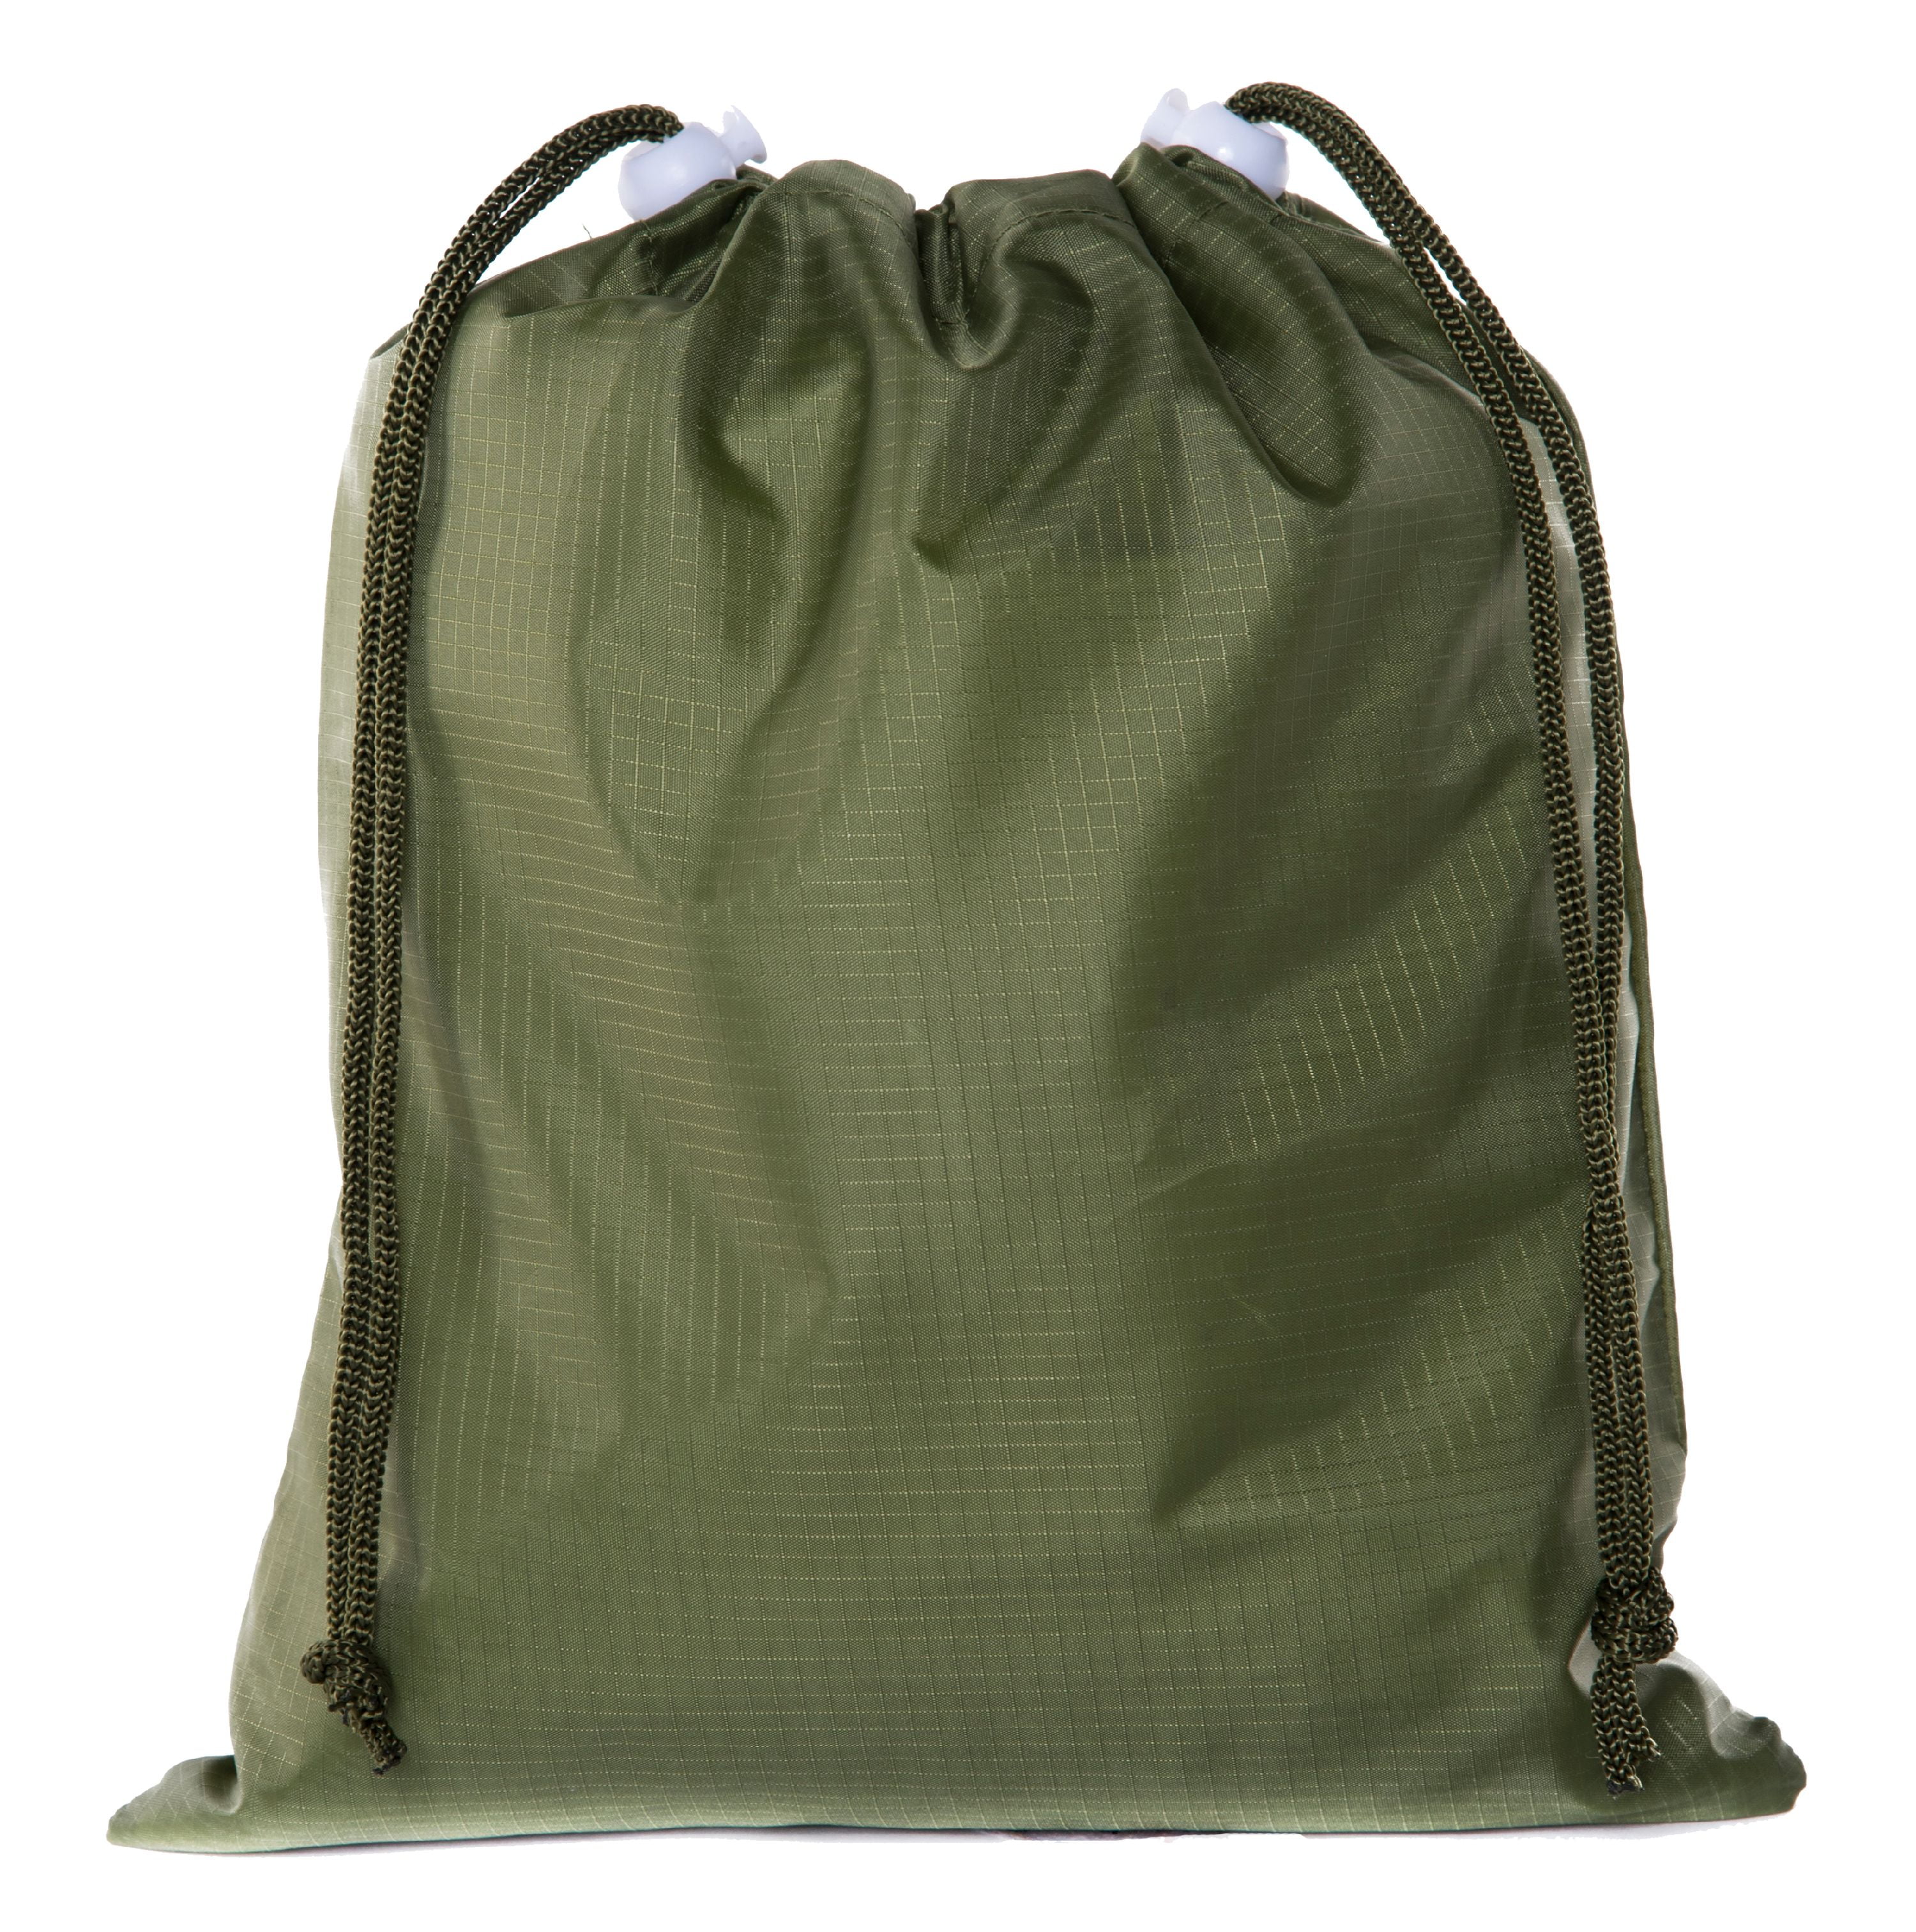 Waterproof 100% drawstring bag availble in 3 sizes 